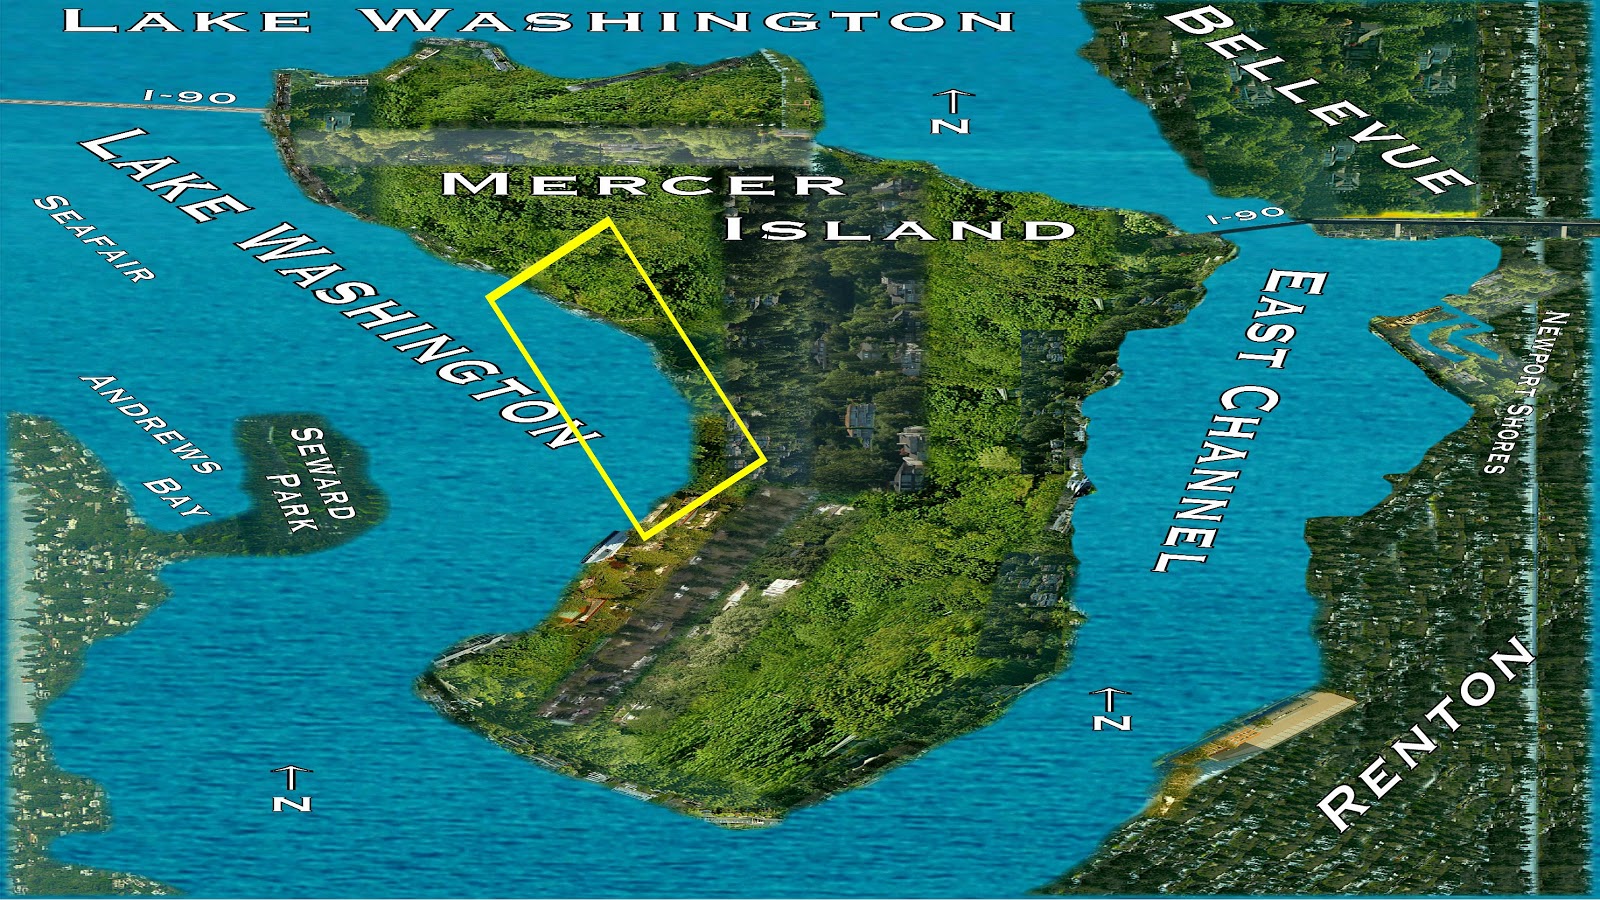 Lake Washington Cruising: Mercer Island West – Central - Mansions